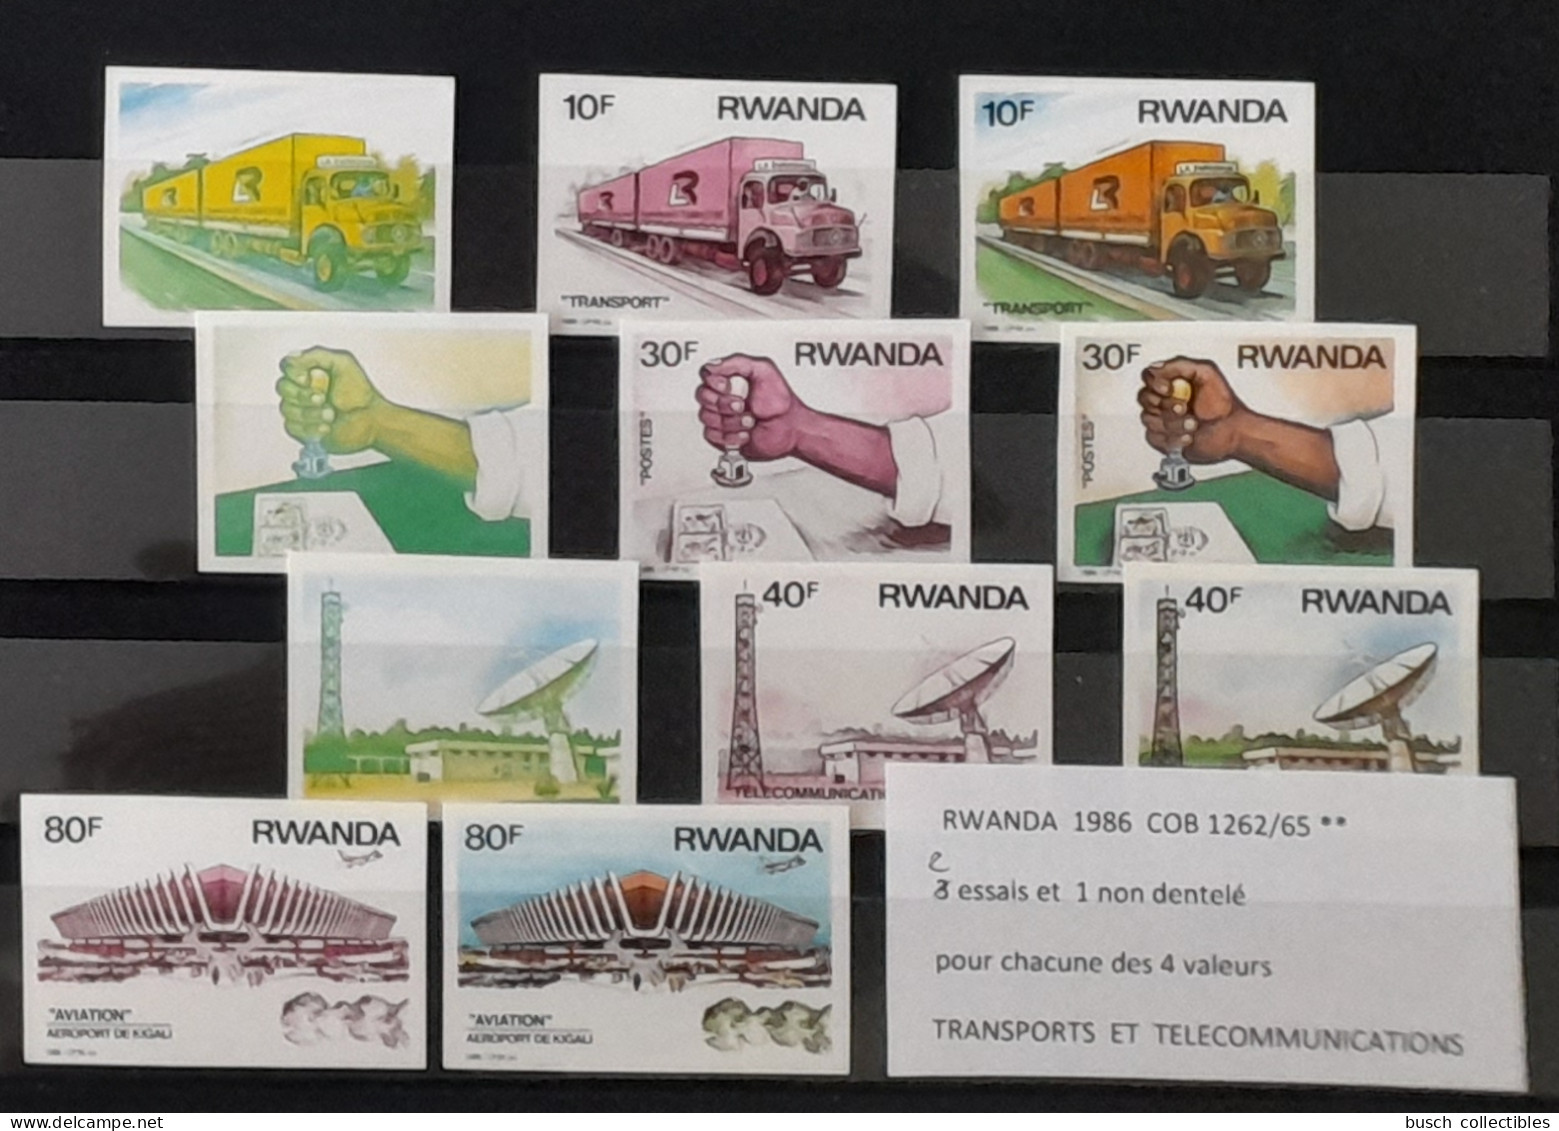 Rwanda 1986 COB 1262 - 1265 Color Proofs Essais Couleur IMPERF ND Transports Télécommunications Truck Airplane Camion - Unused Stamps